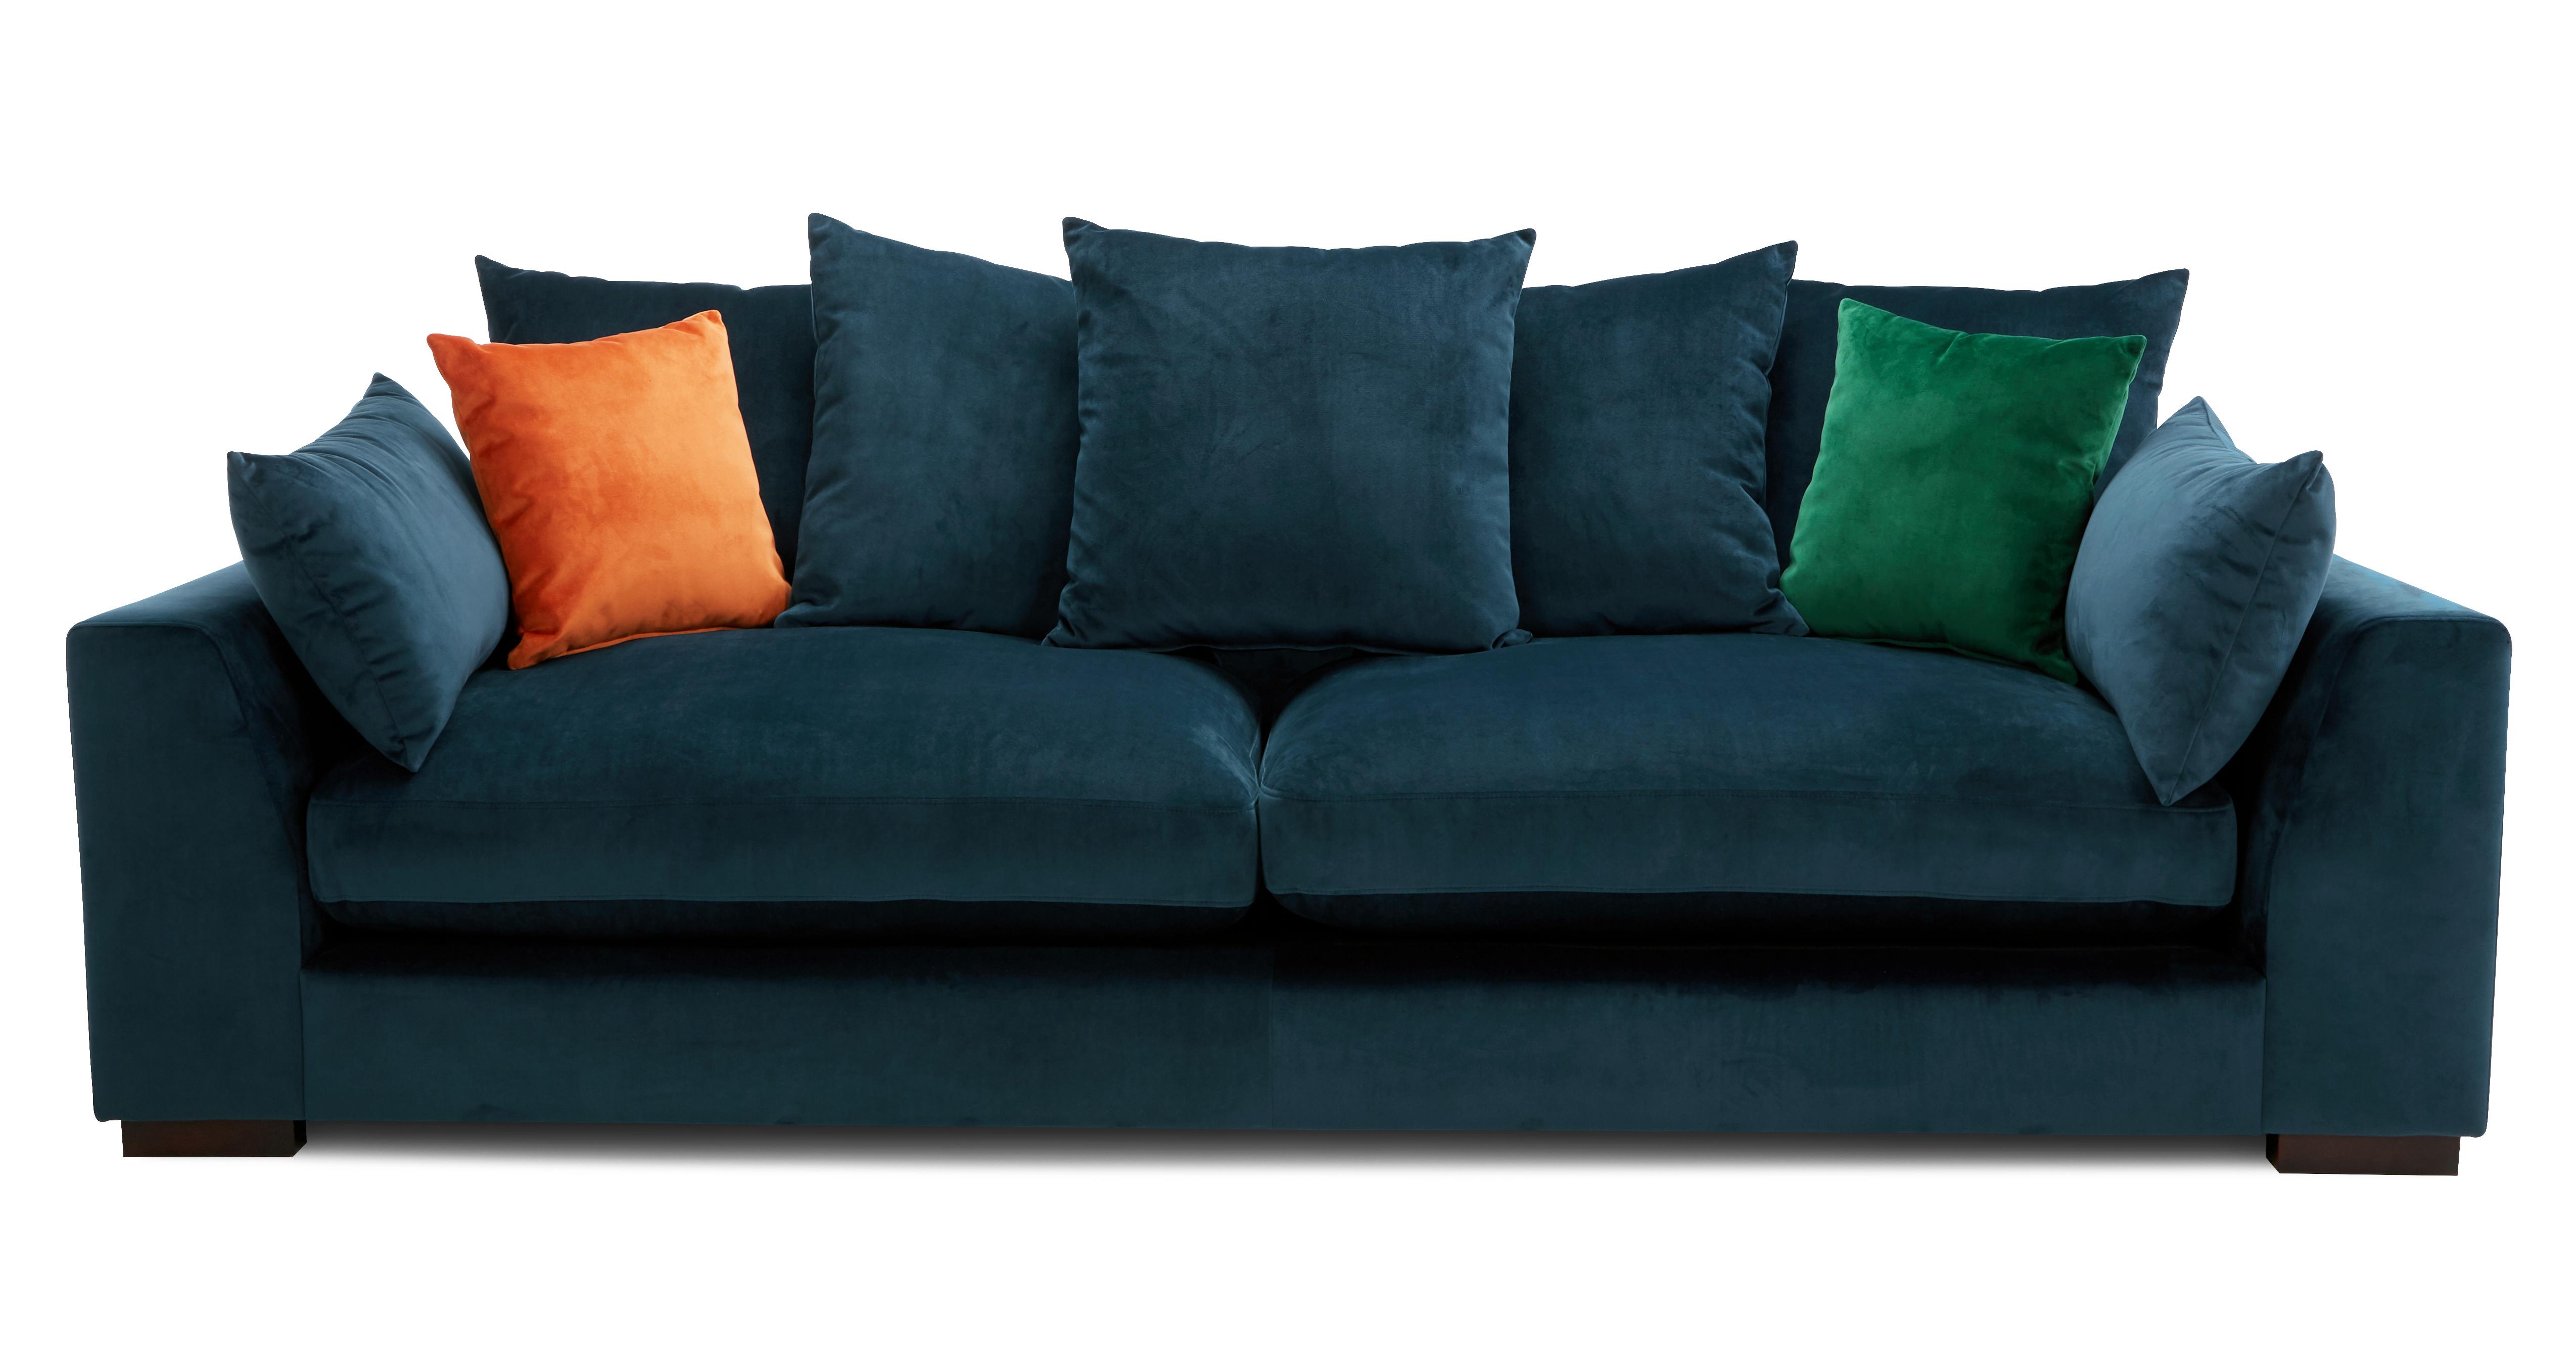 plush sofa bed review